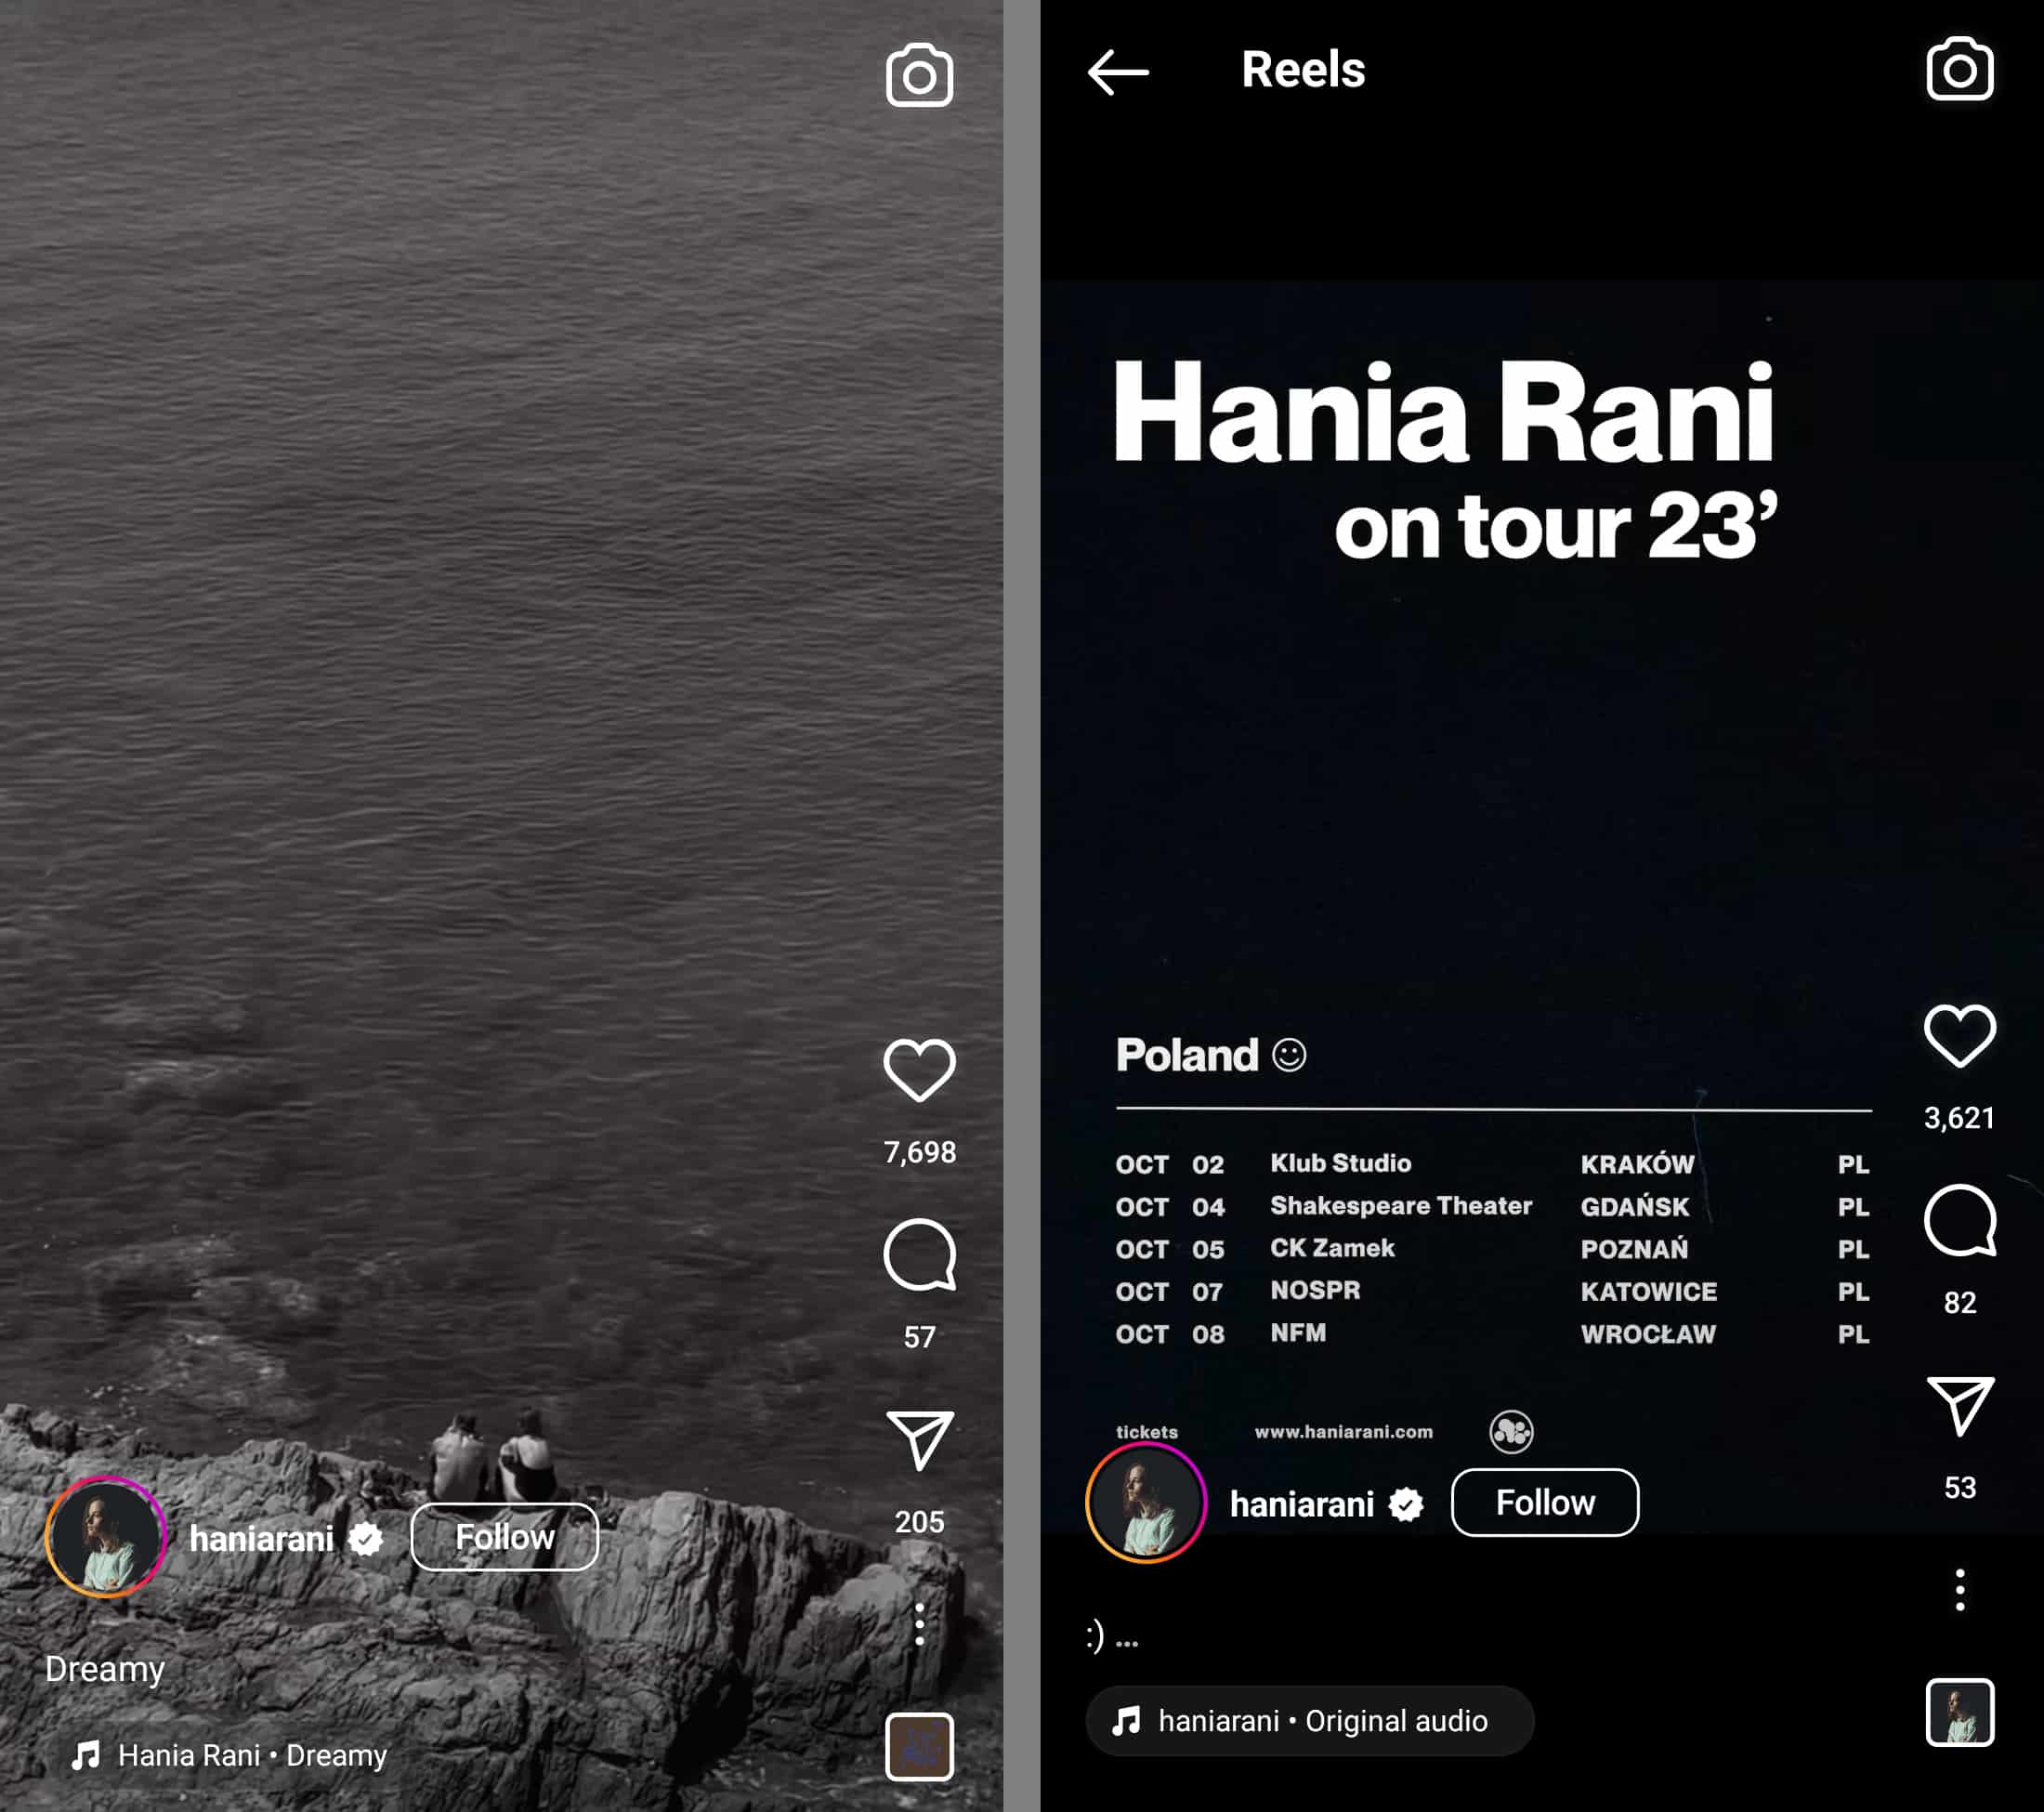 types of Instagram accounts example - haniarani